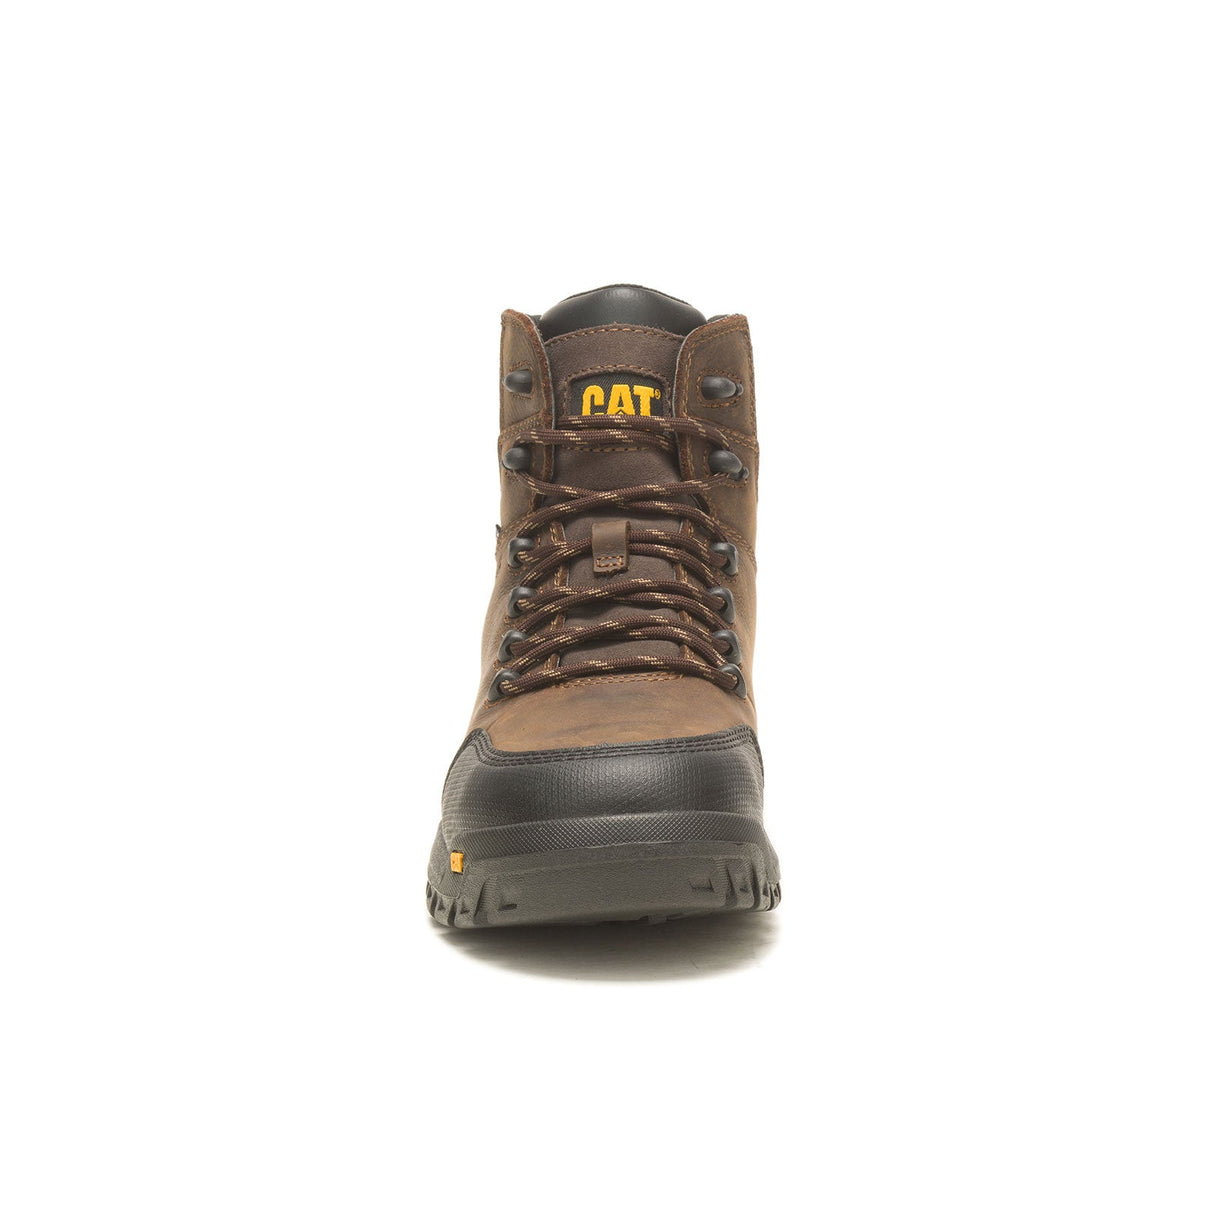 Caterpillar Resorption Men's Composite-Toe Work Boots Wp P90977-3